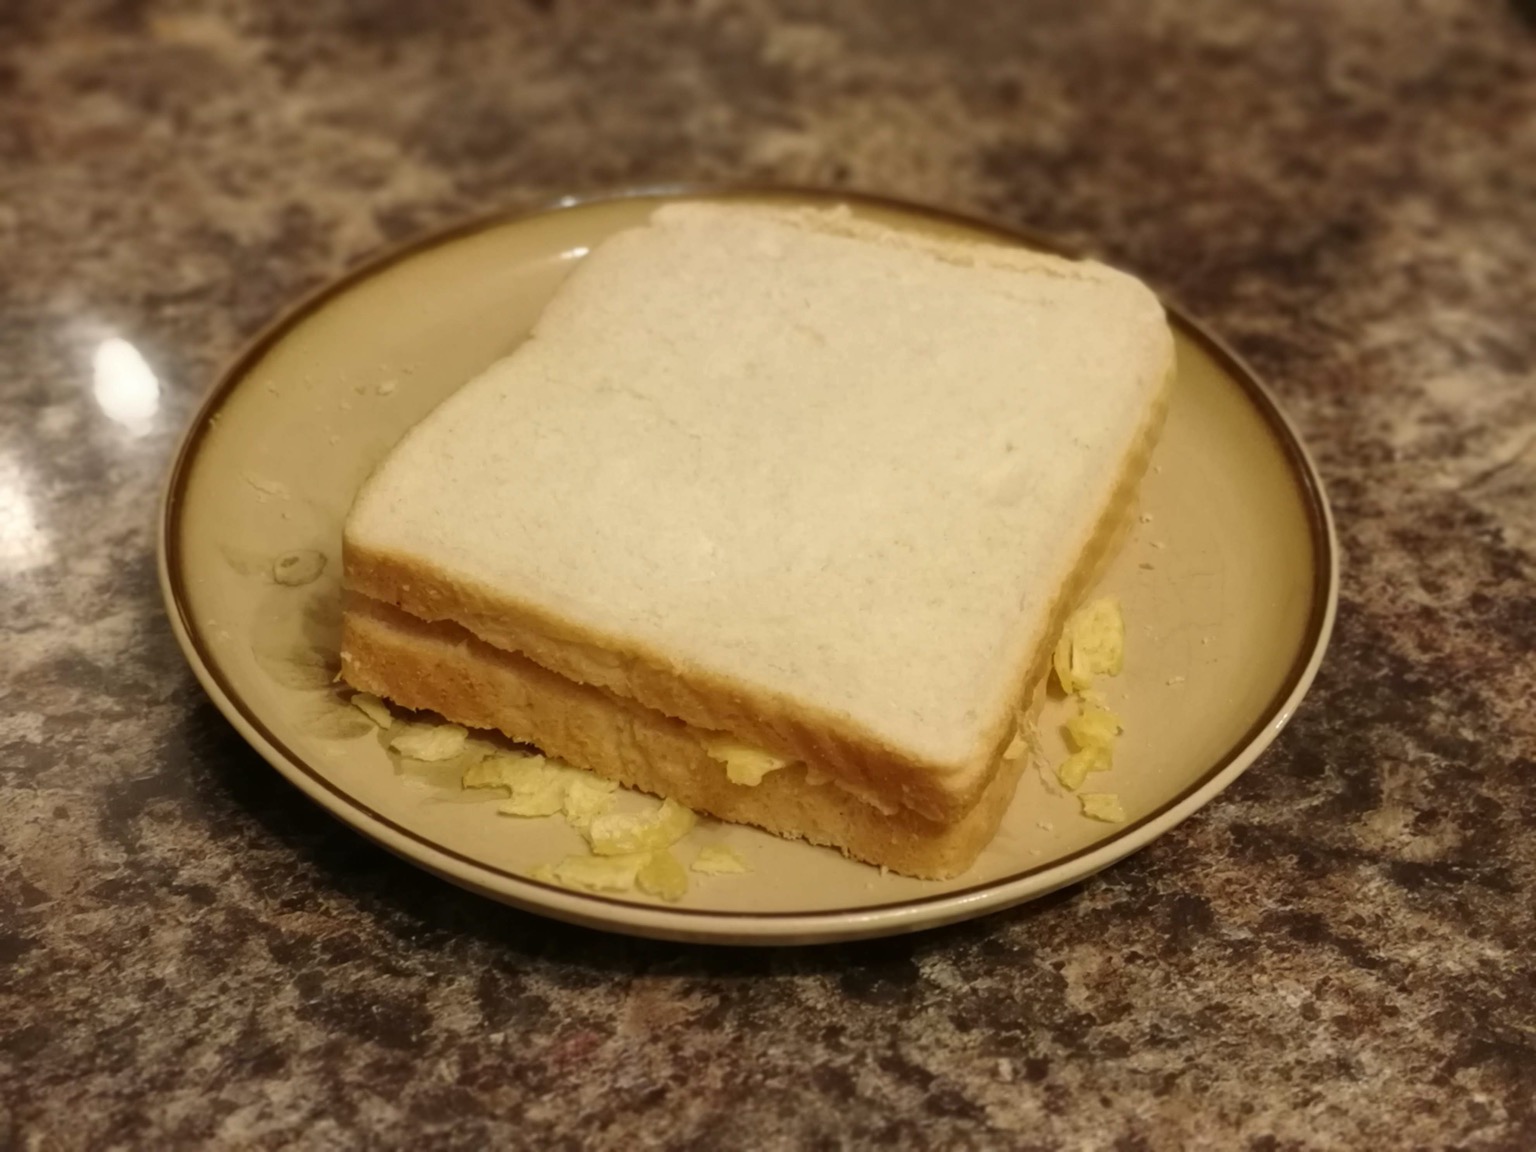 Crisp sandwich on a plate on a granite surface